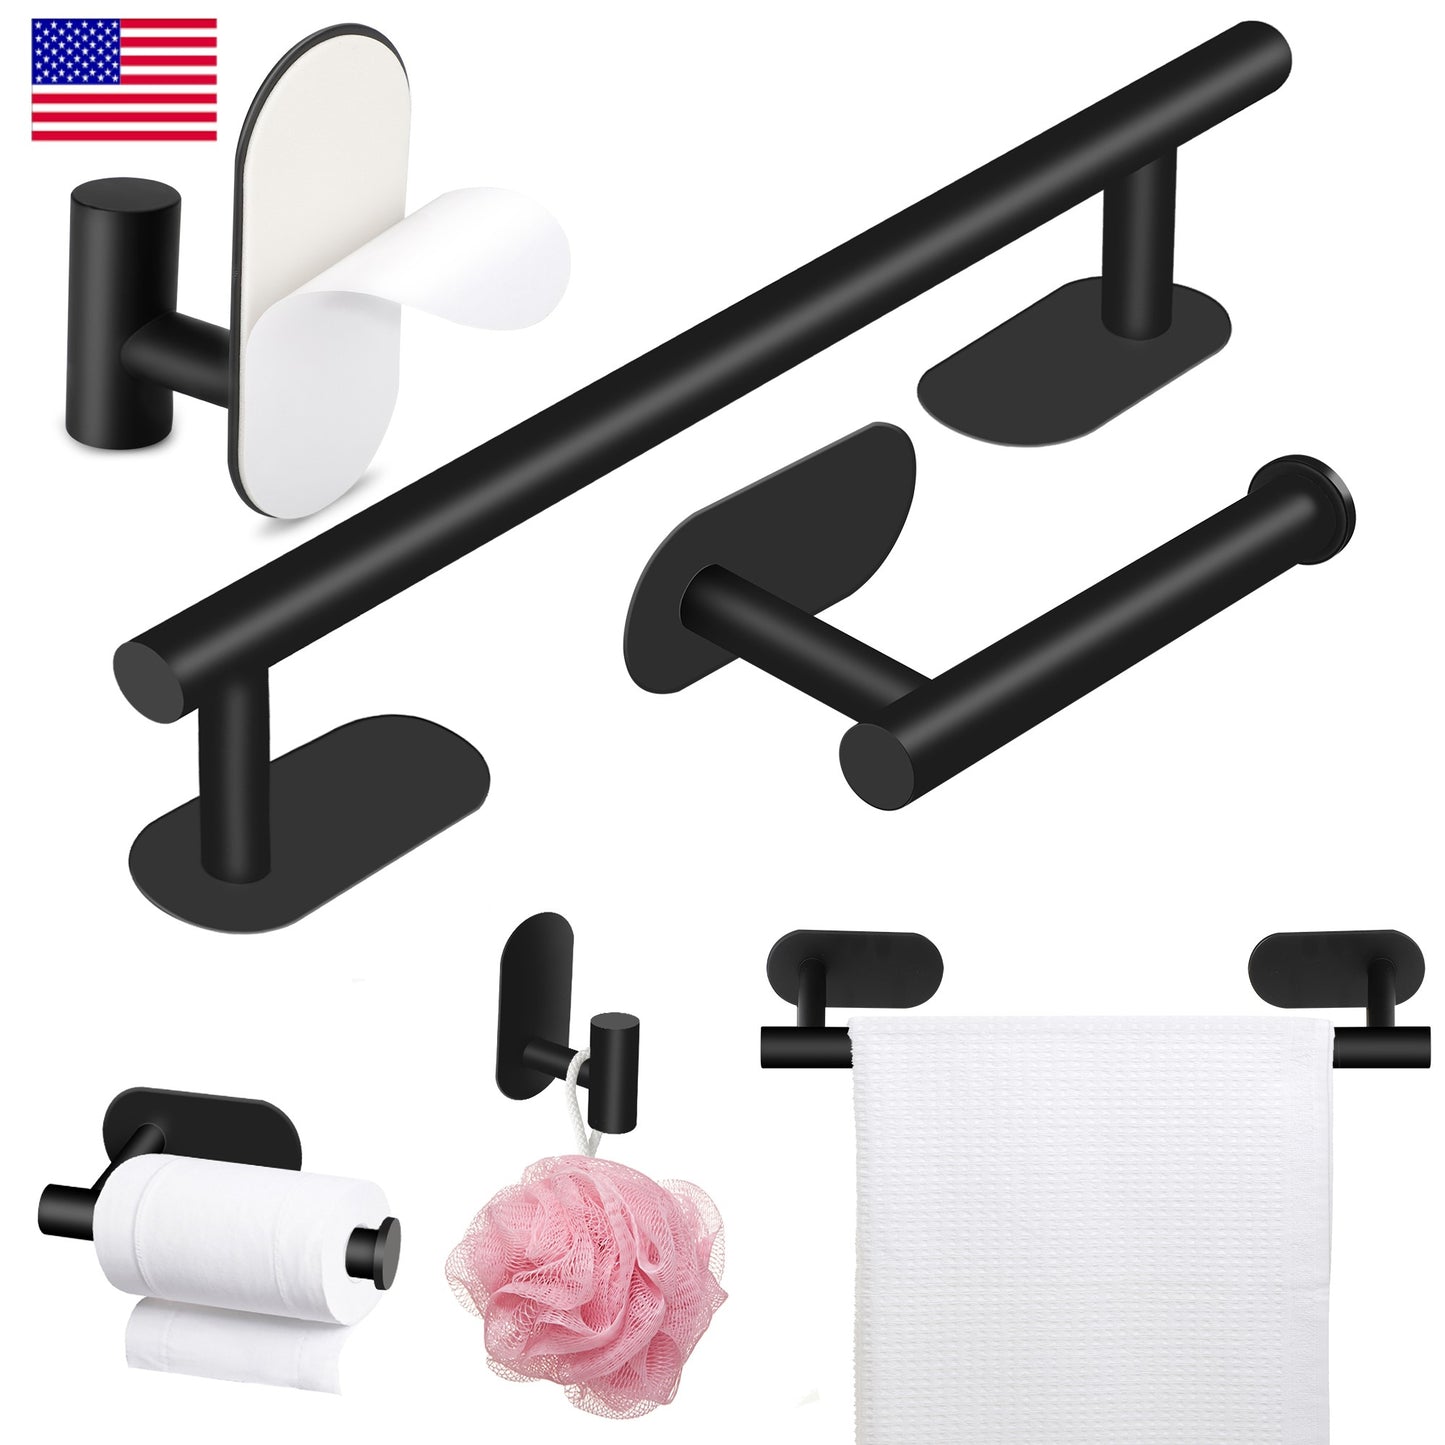 Adhesive Bathroom Shelf Set - Stainless Steel Bathroom Organizer with Towel Bar and Hook,Toilet Paper Holder Towel Bar Rack Bathroom Hardware Set (black)